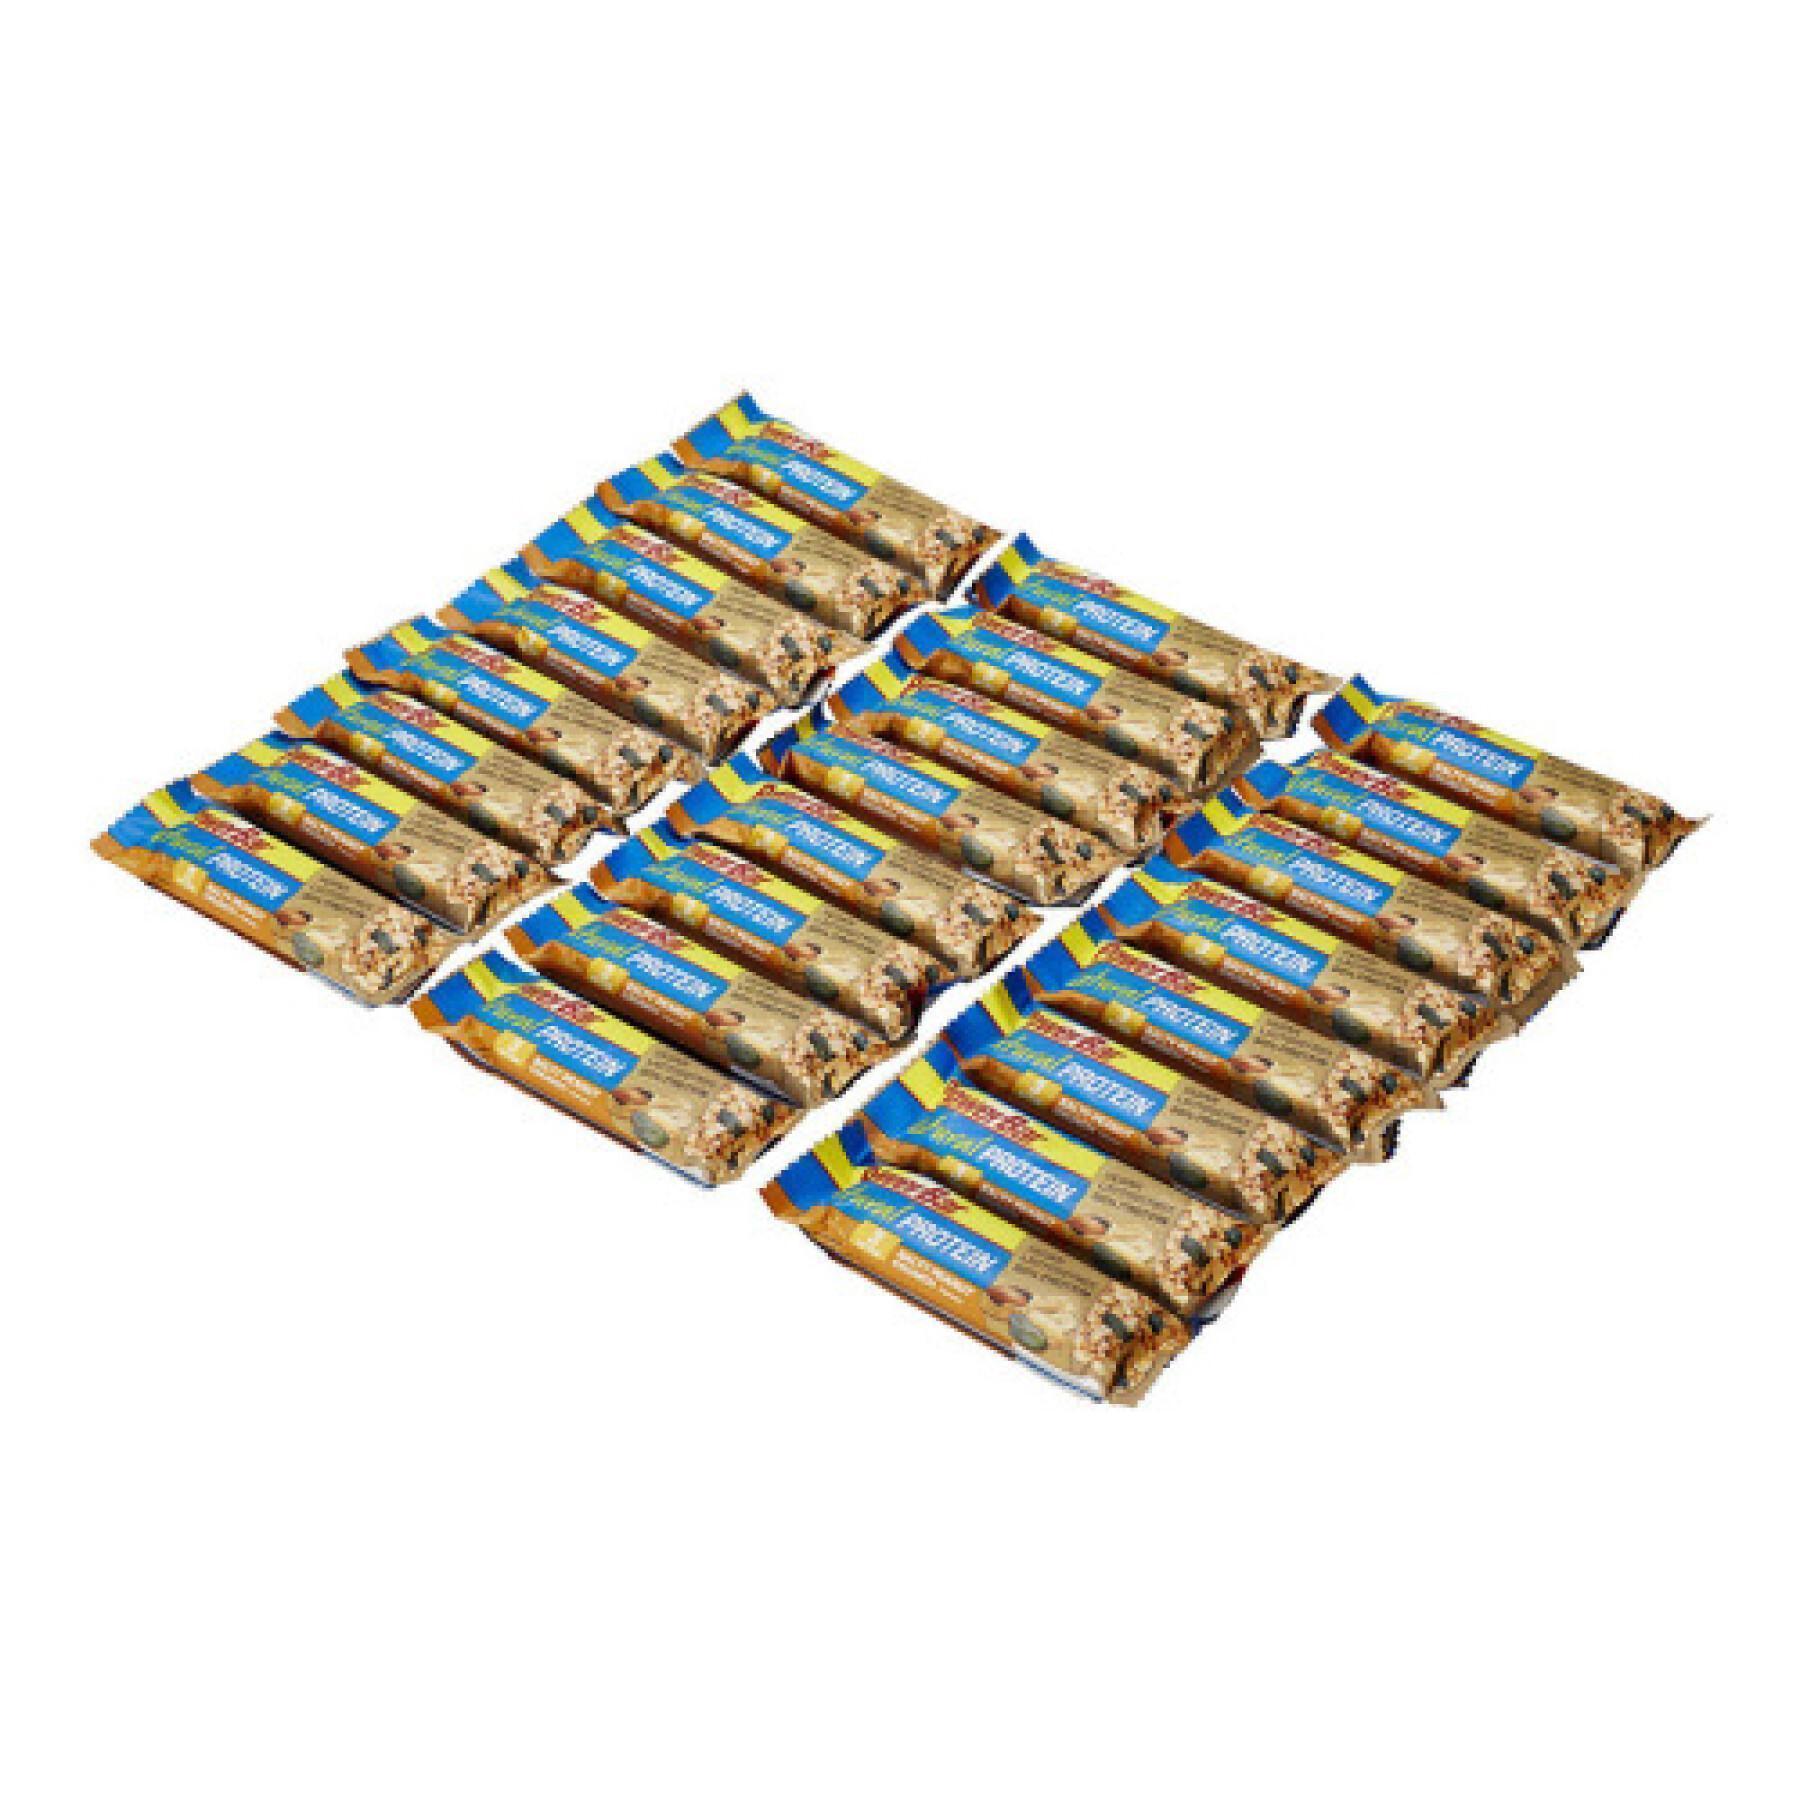 Batch of 24 bars PowerBar Natural Protein Vegan - Salty Peanut Crunch